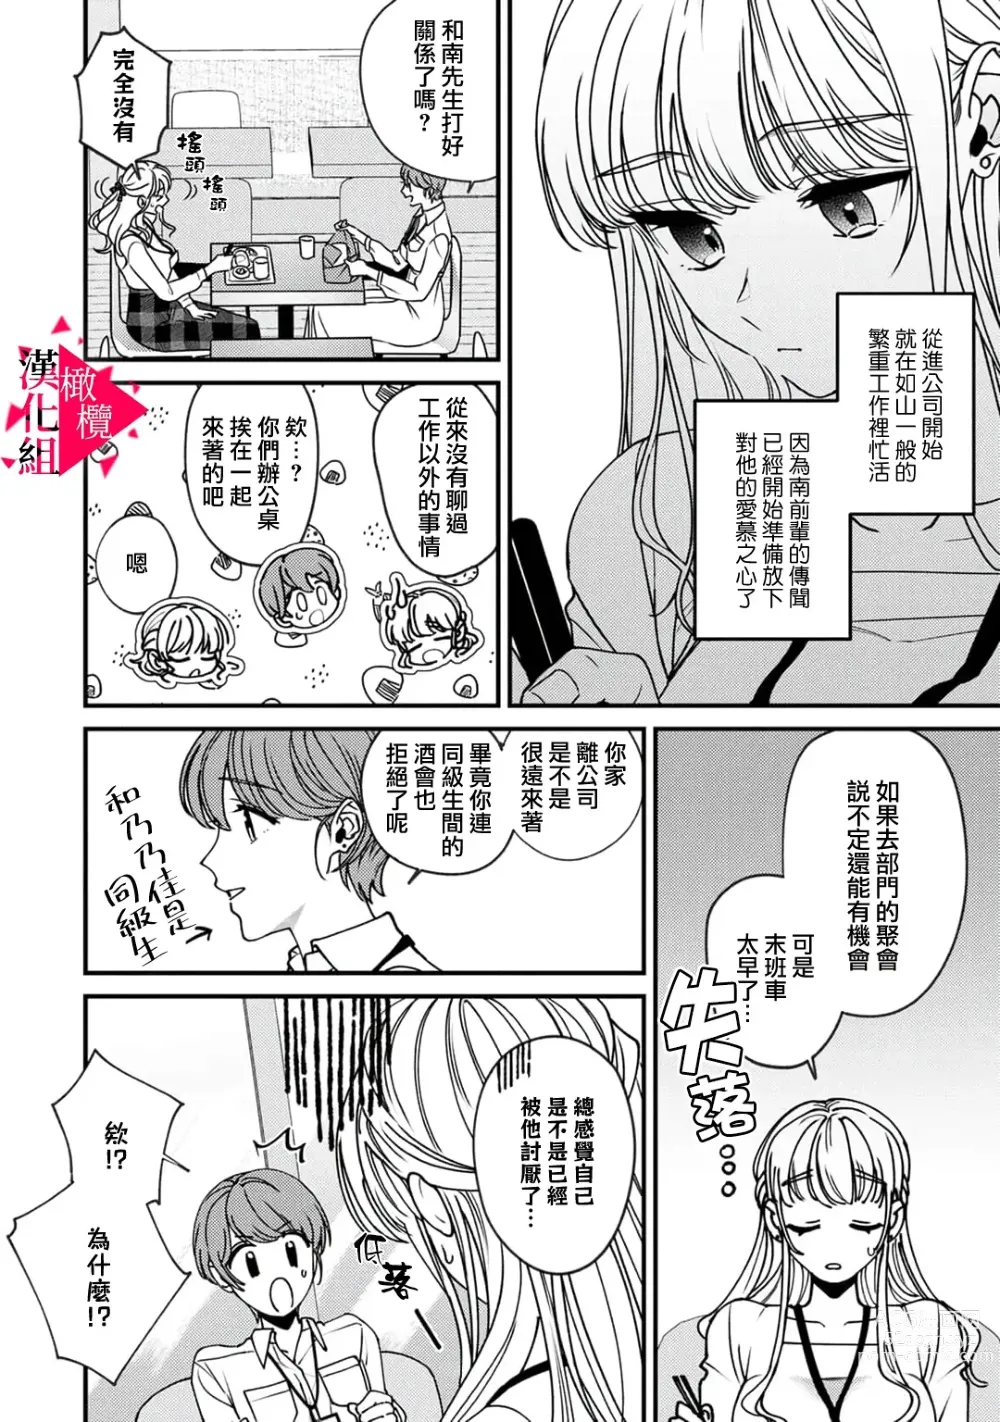 Page 6 of manga 南前辈比妄想中更加情色绝伦~01-06